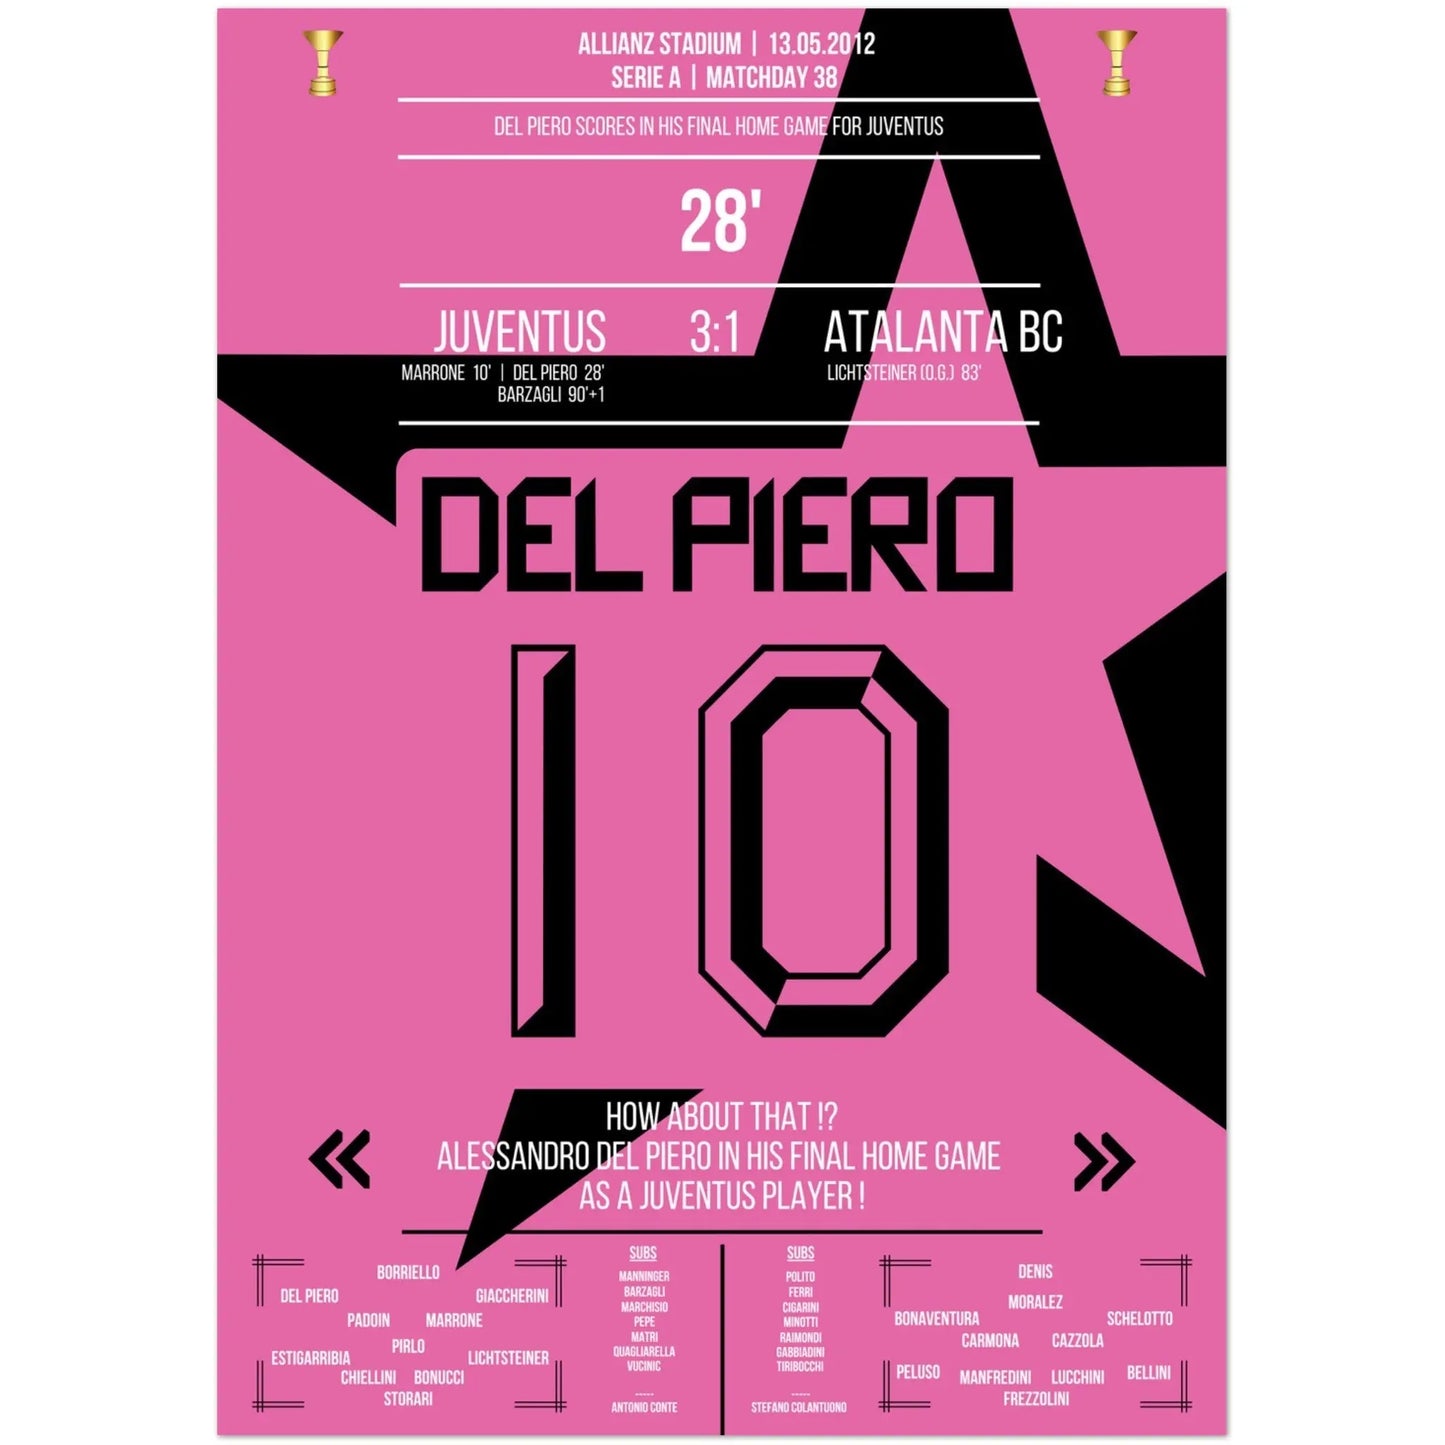 Le but d'adieu parfait de Del Piero contre l'Atalanta en 2011/12